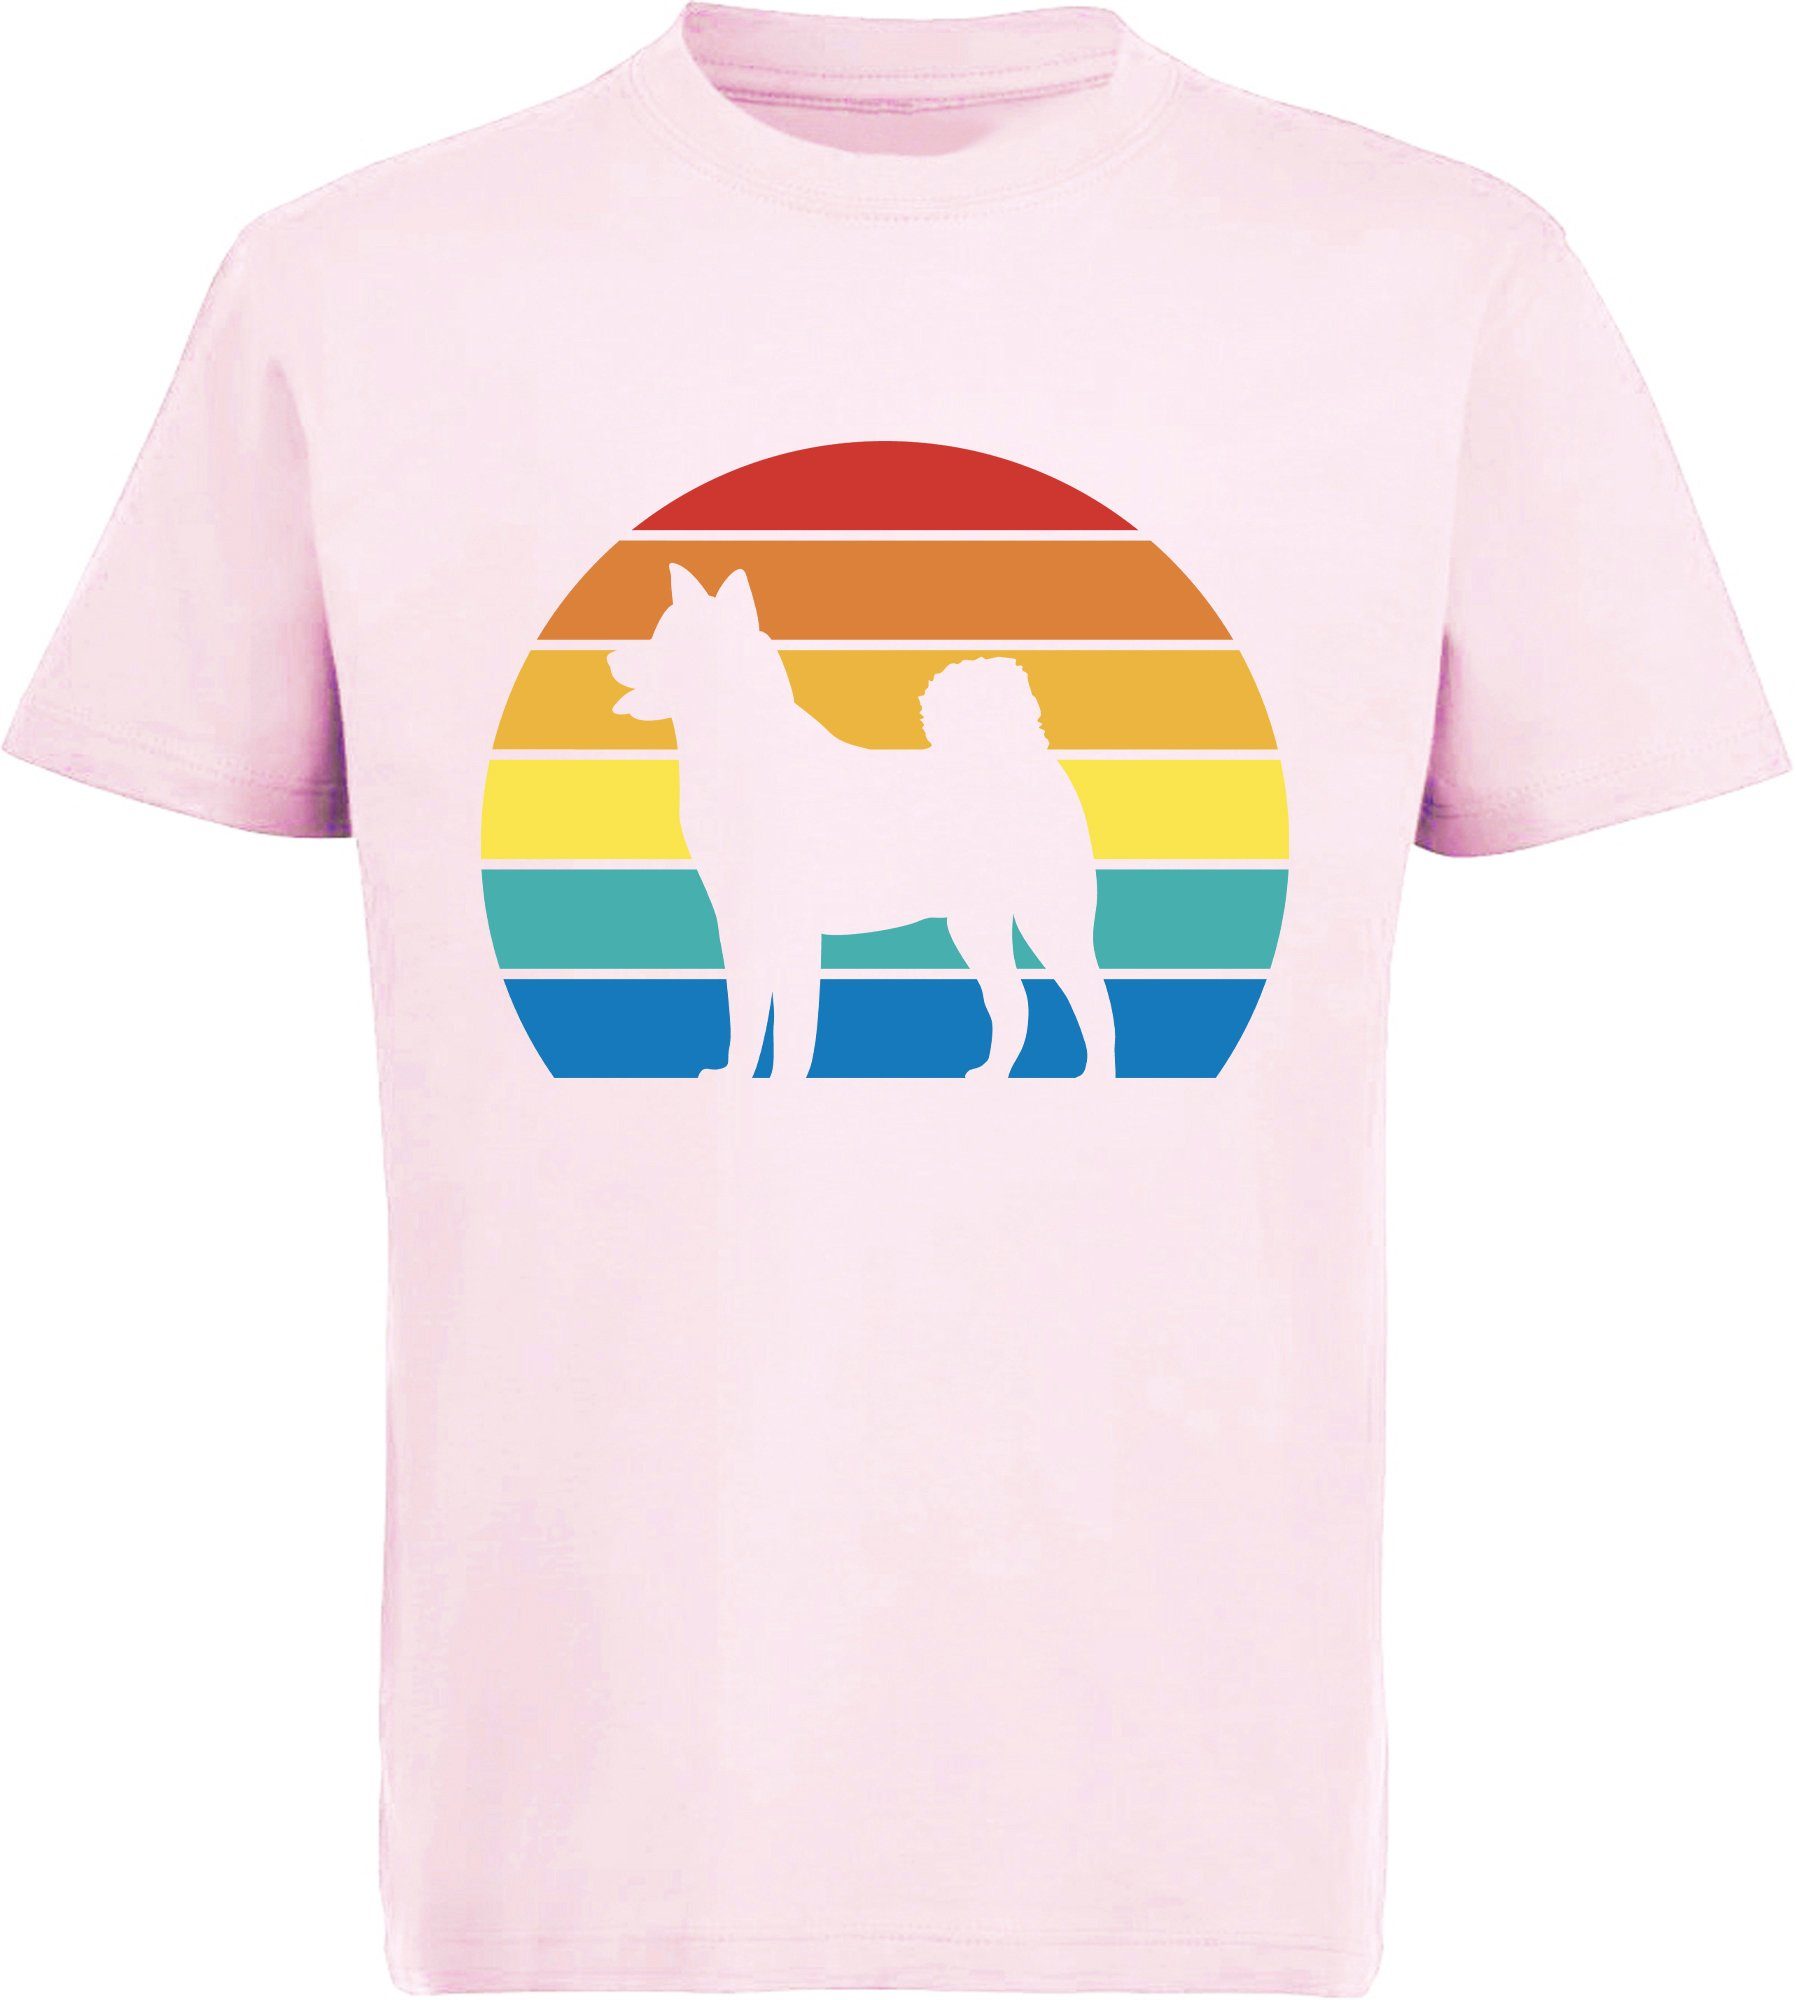 MyDesign24 Print-Shirt Kinder Hunde T-Shirt bedruckt - Retro Akita Bild Baumwollshirt mit Aufdruck, i236 rosa